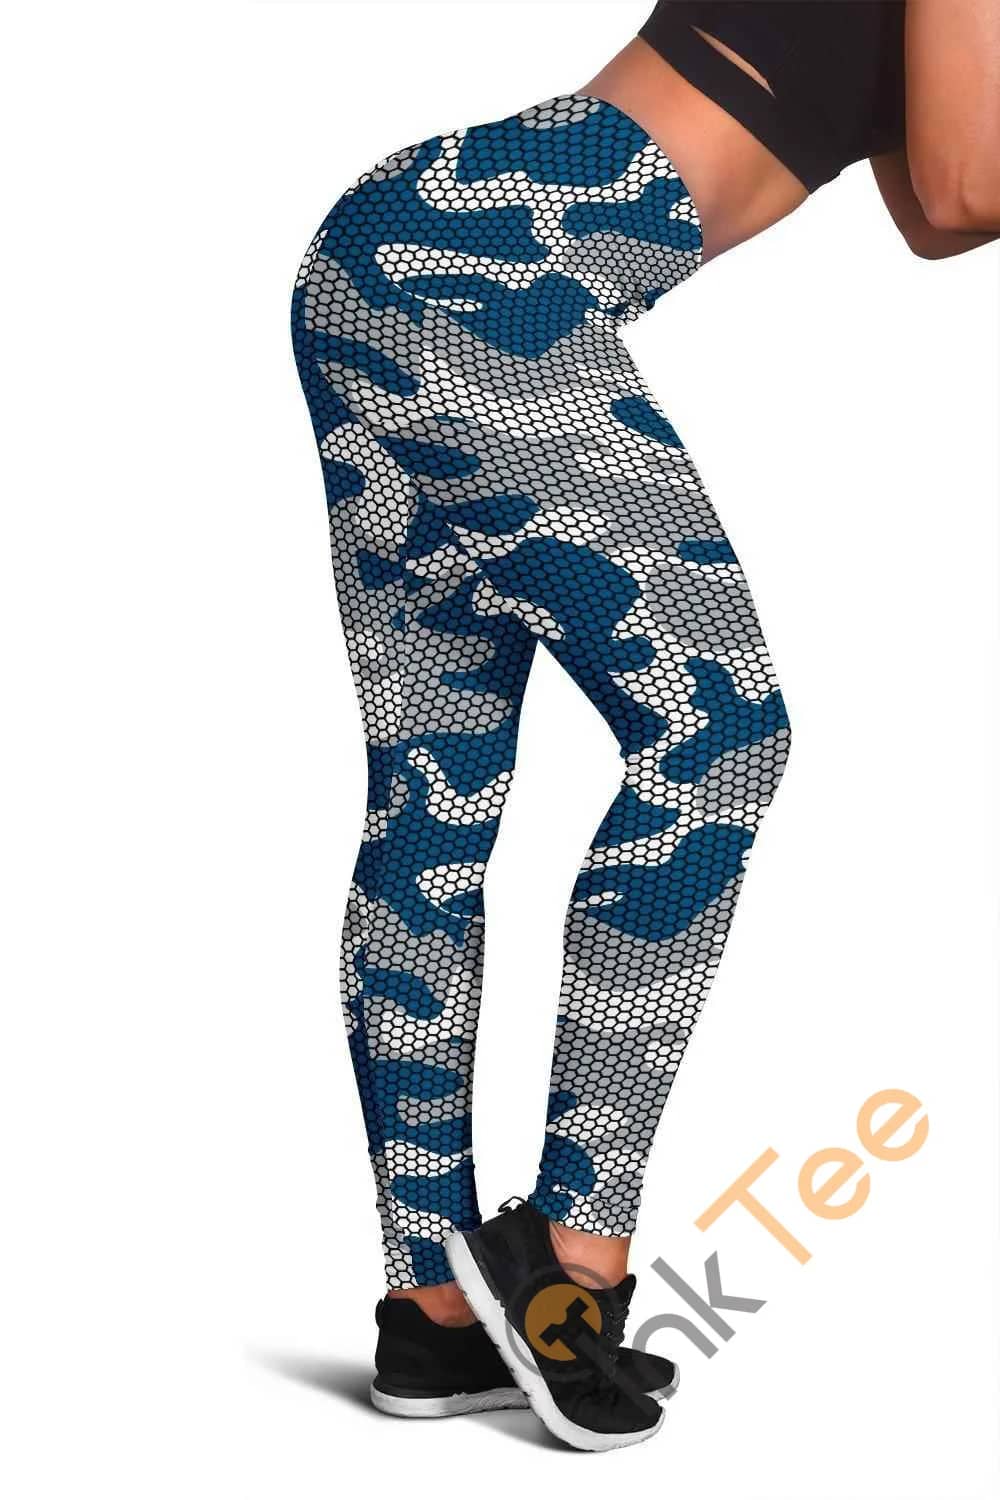 Detroit Lions Inspired Hex Camo 3D All Over Print For Yoga Fitness Fashion Women's Leggings